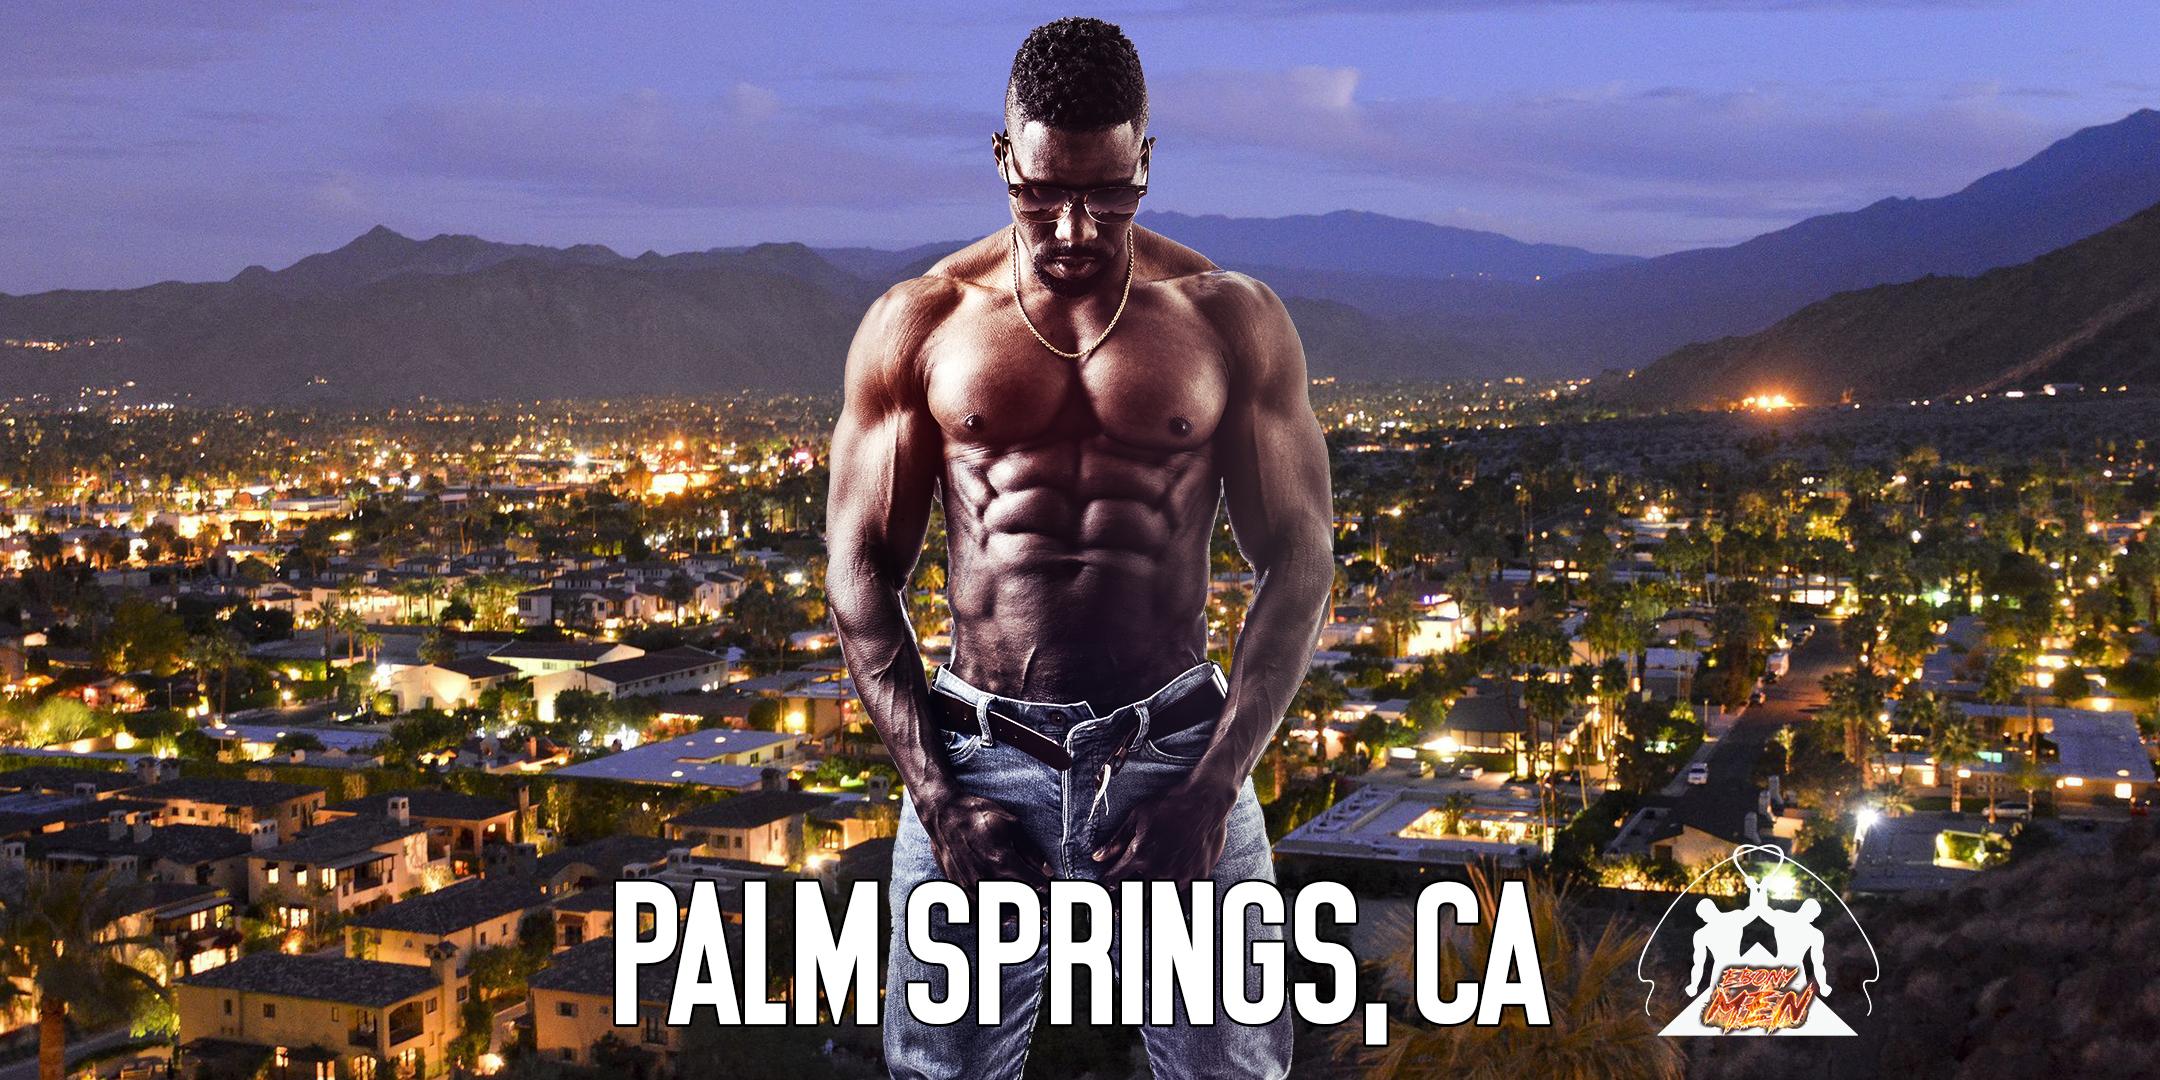 Ebony Men Black Male Revue Strip Clubs & Black Male Strippers Palm Springs, CA 8-10PM